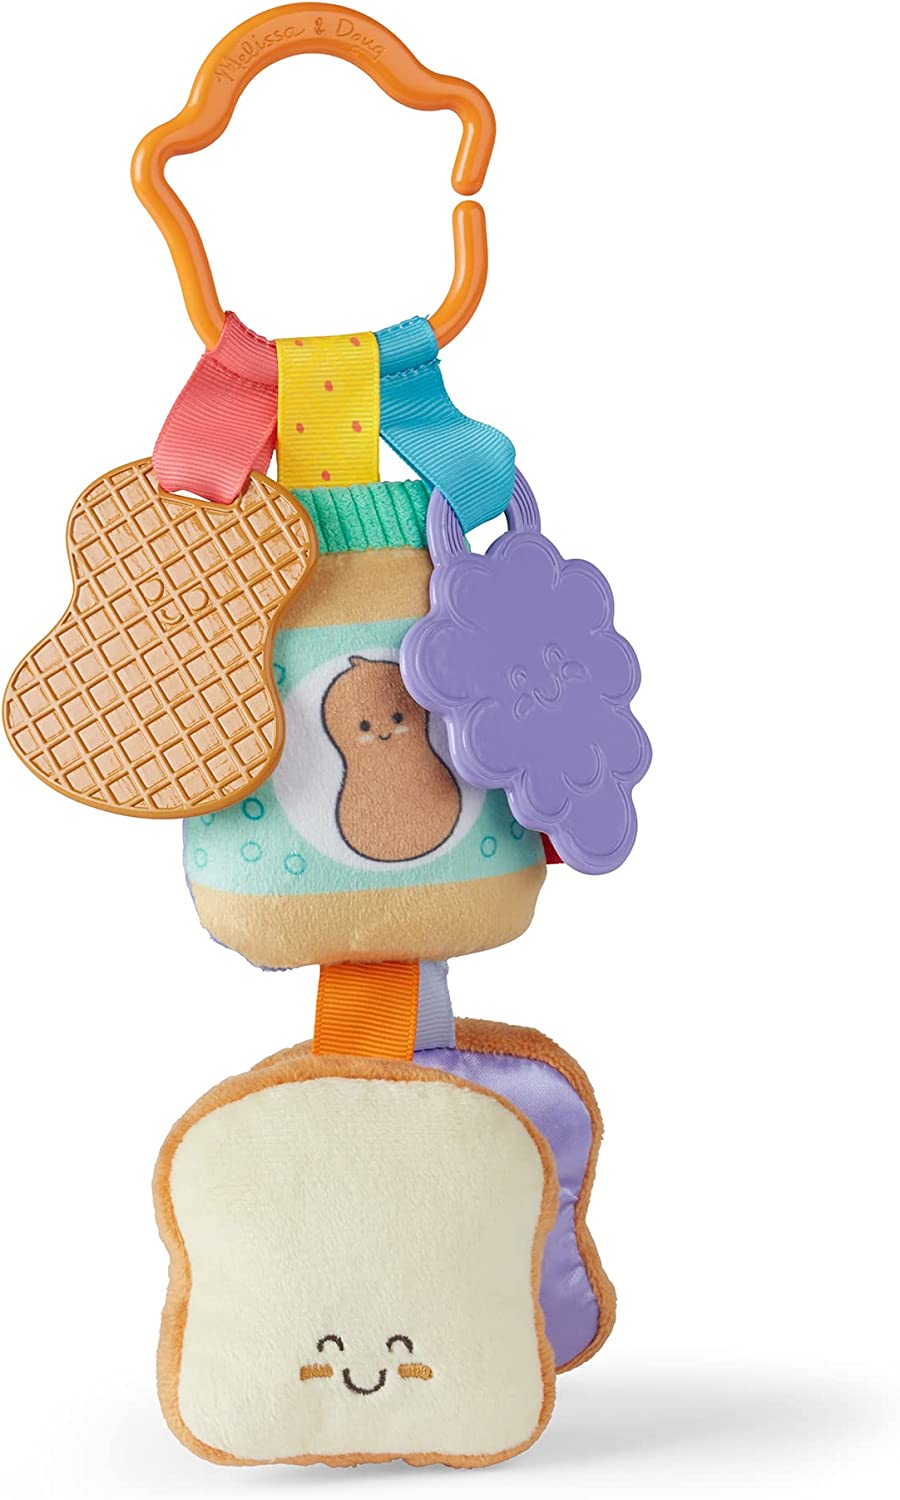 Melissa & DougTake-Along Clip-On Infant ToyStyle: Sandwich Take Along Baby ToyEarthlets